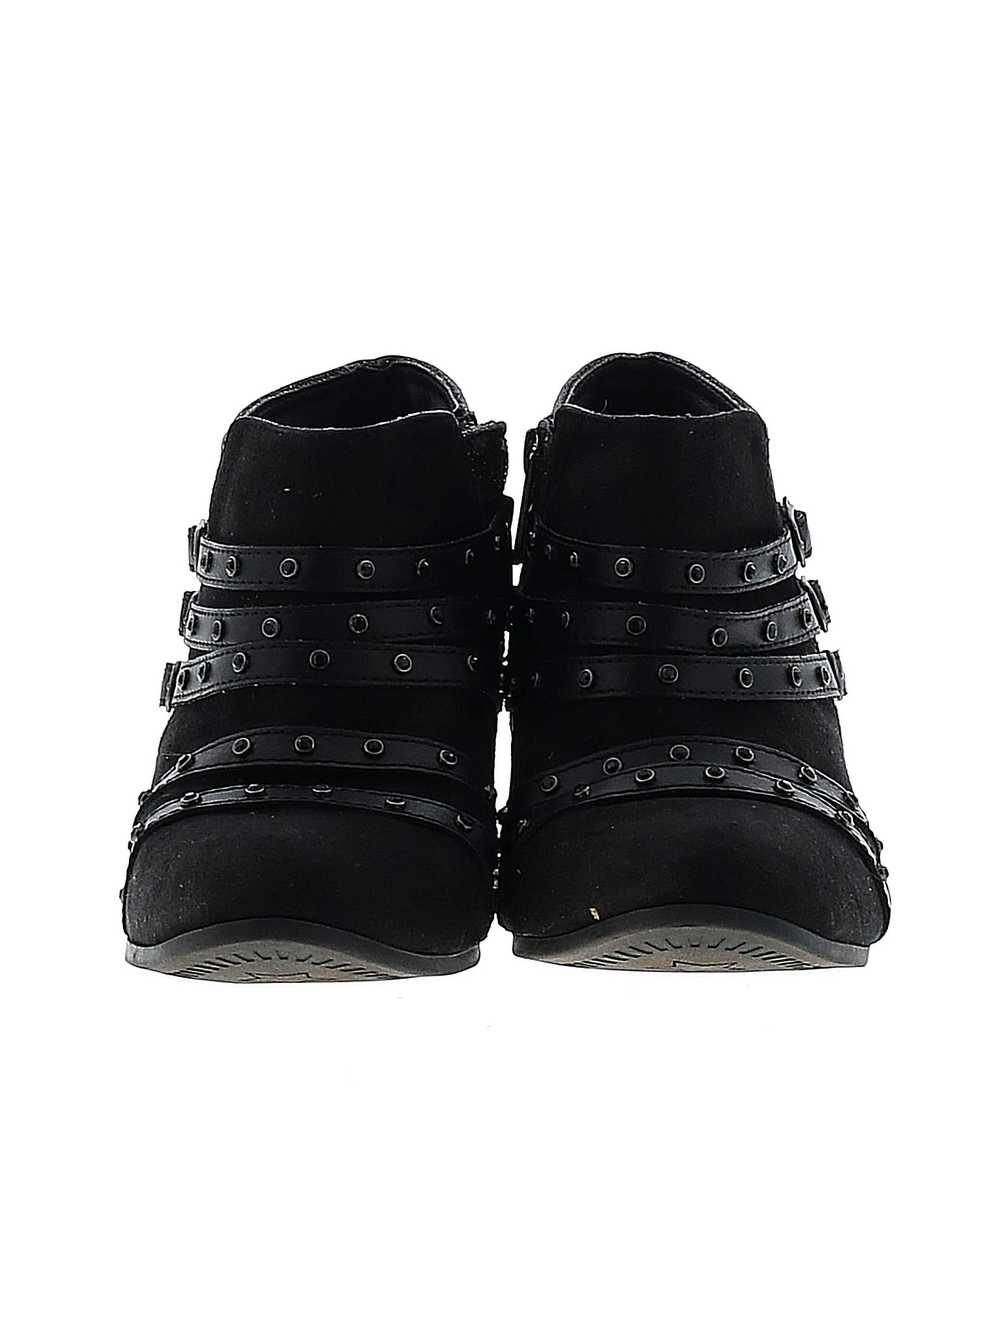 Jessica Simpson Women Black Ankle Boots 5 - image 2